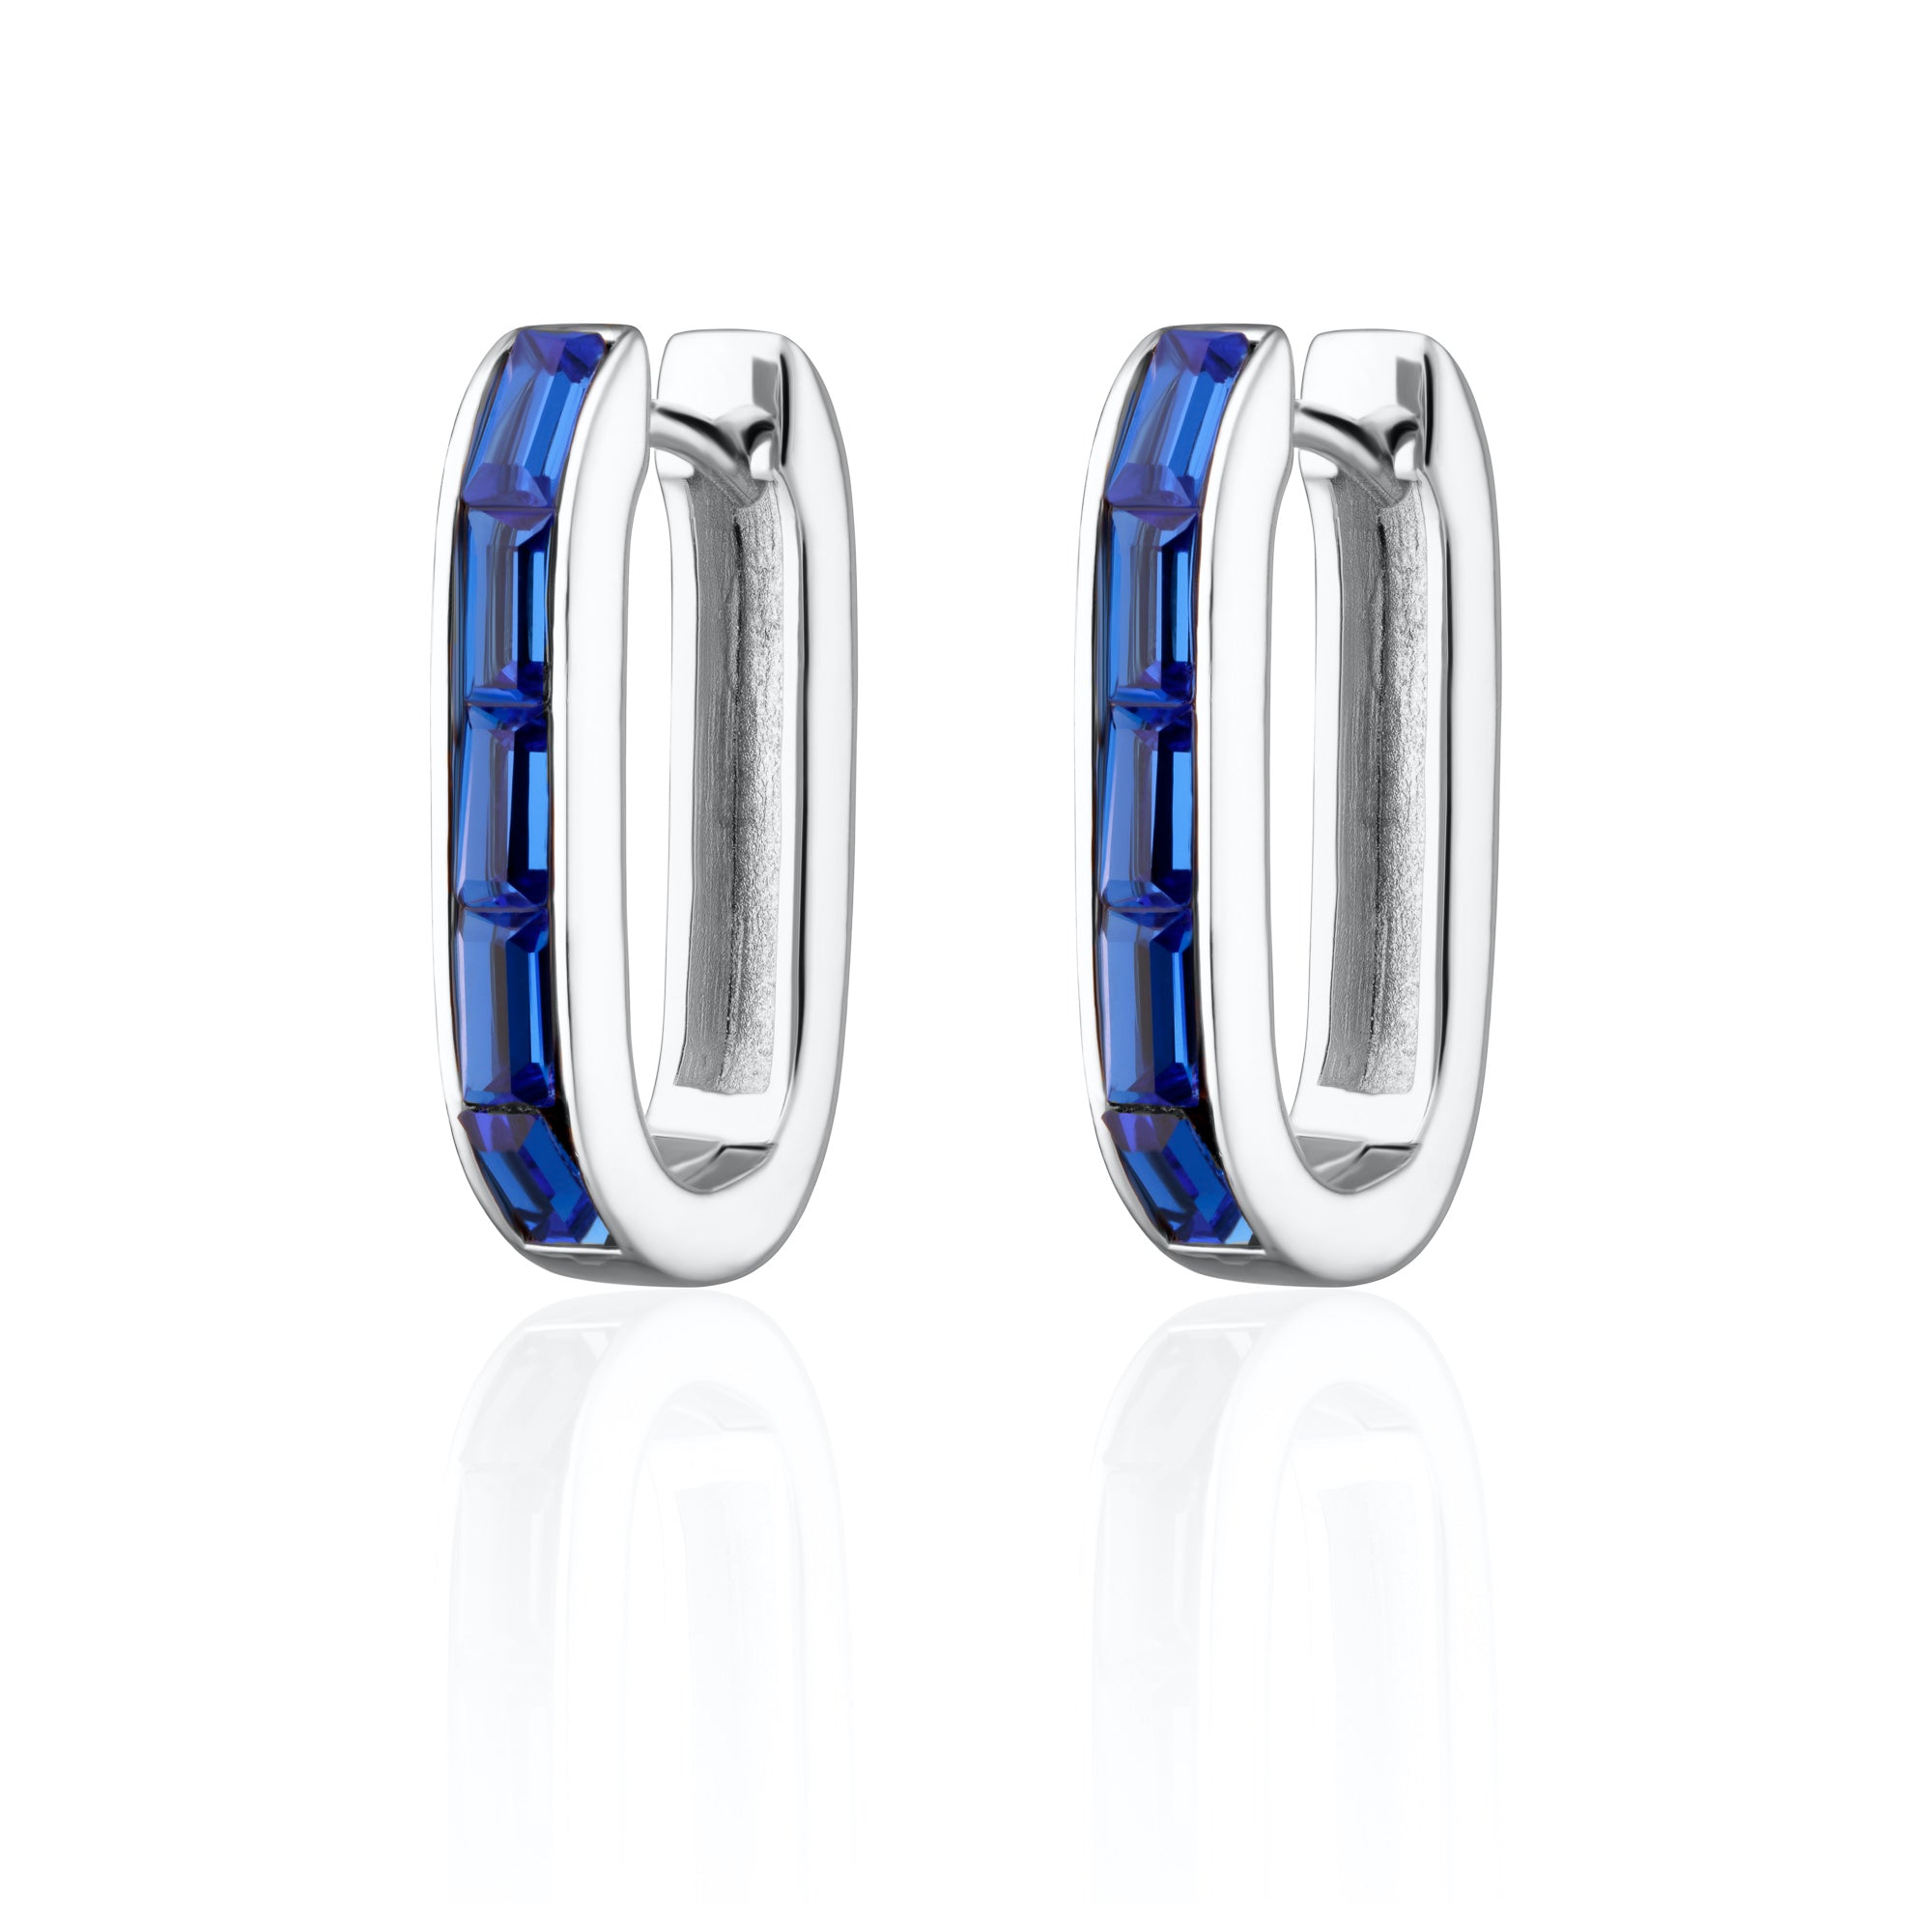 Oval Baguette Hoop Earrings with Blue Stones by Scream Pretty